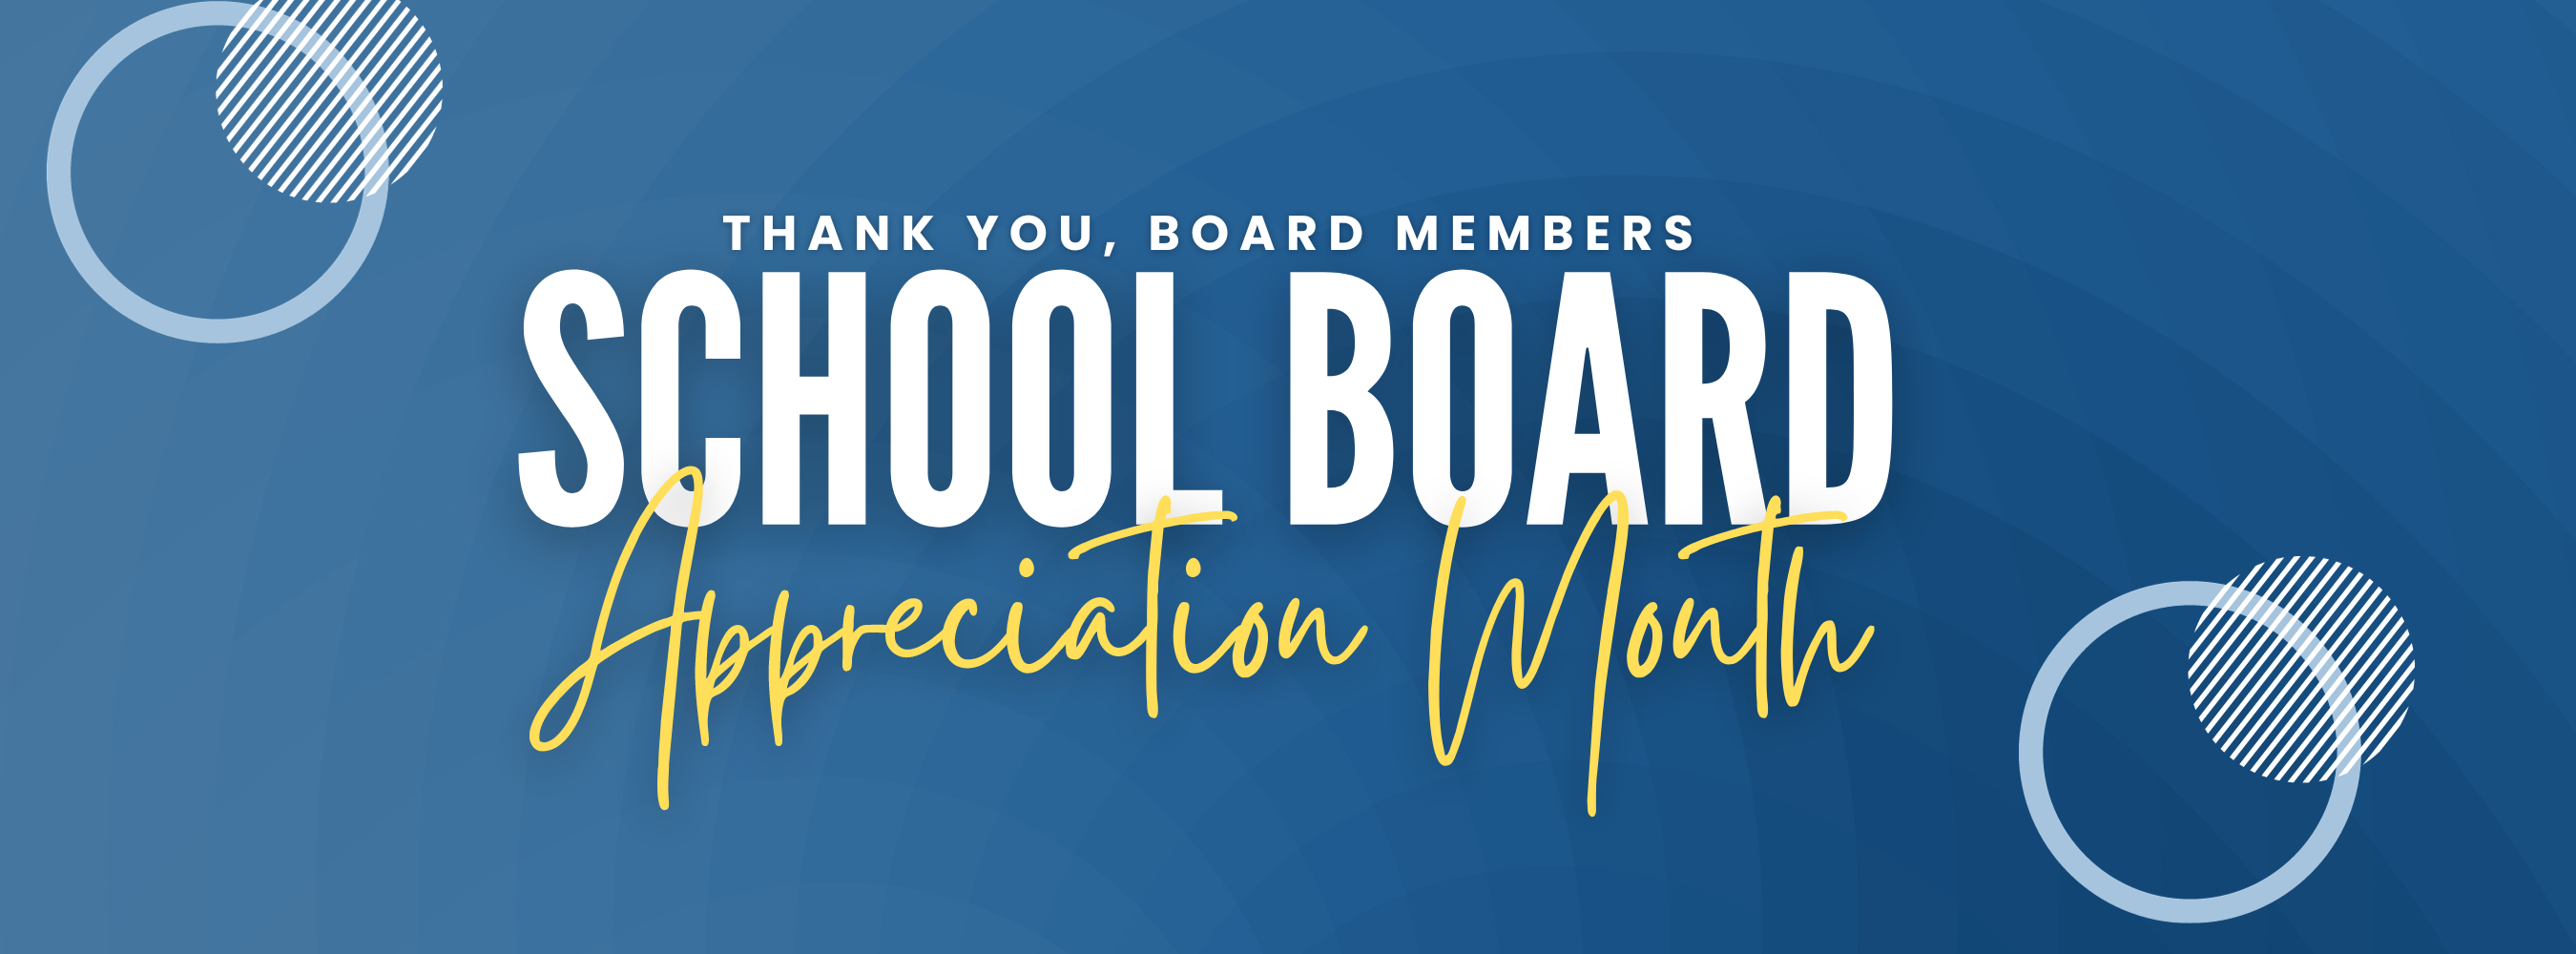 Thank you, Board Members. 